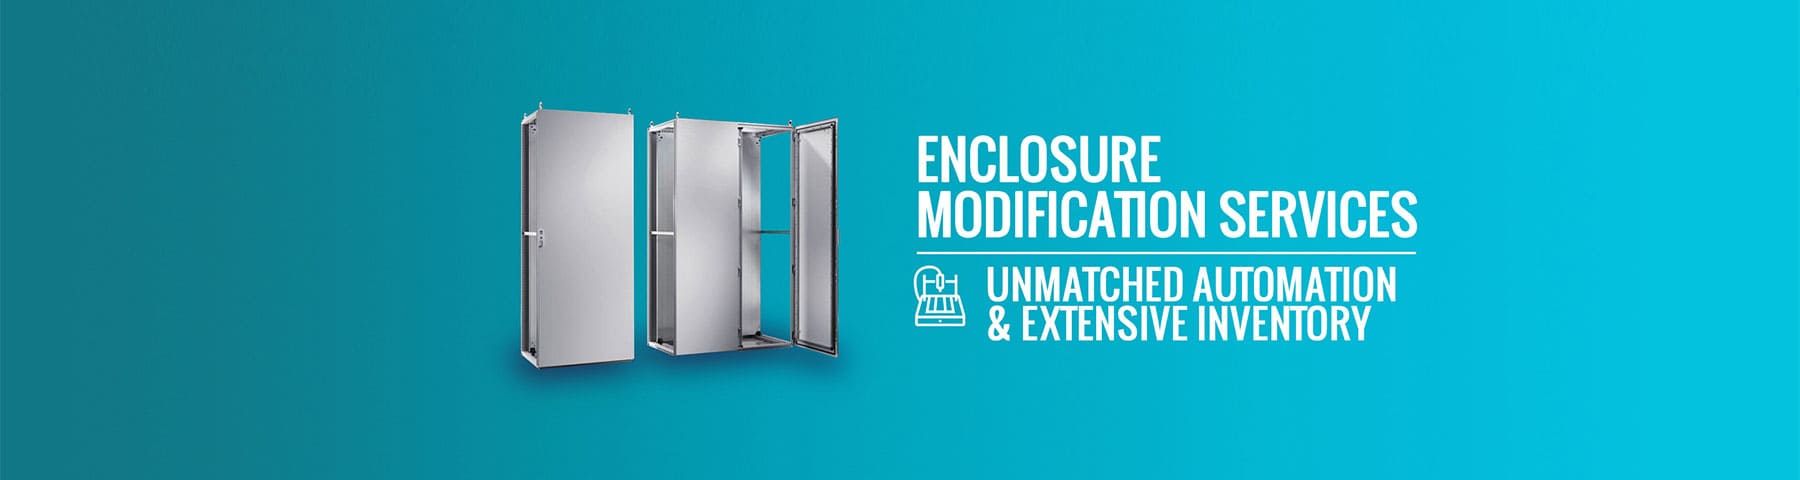 Enclosure Modification